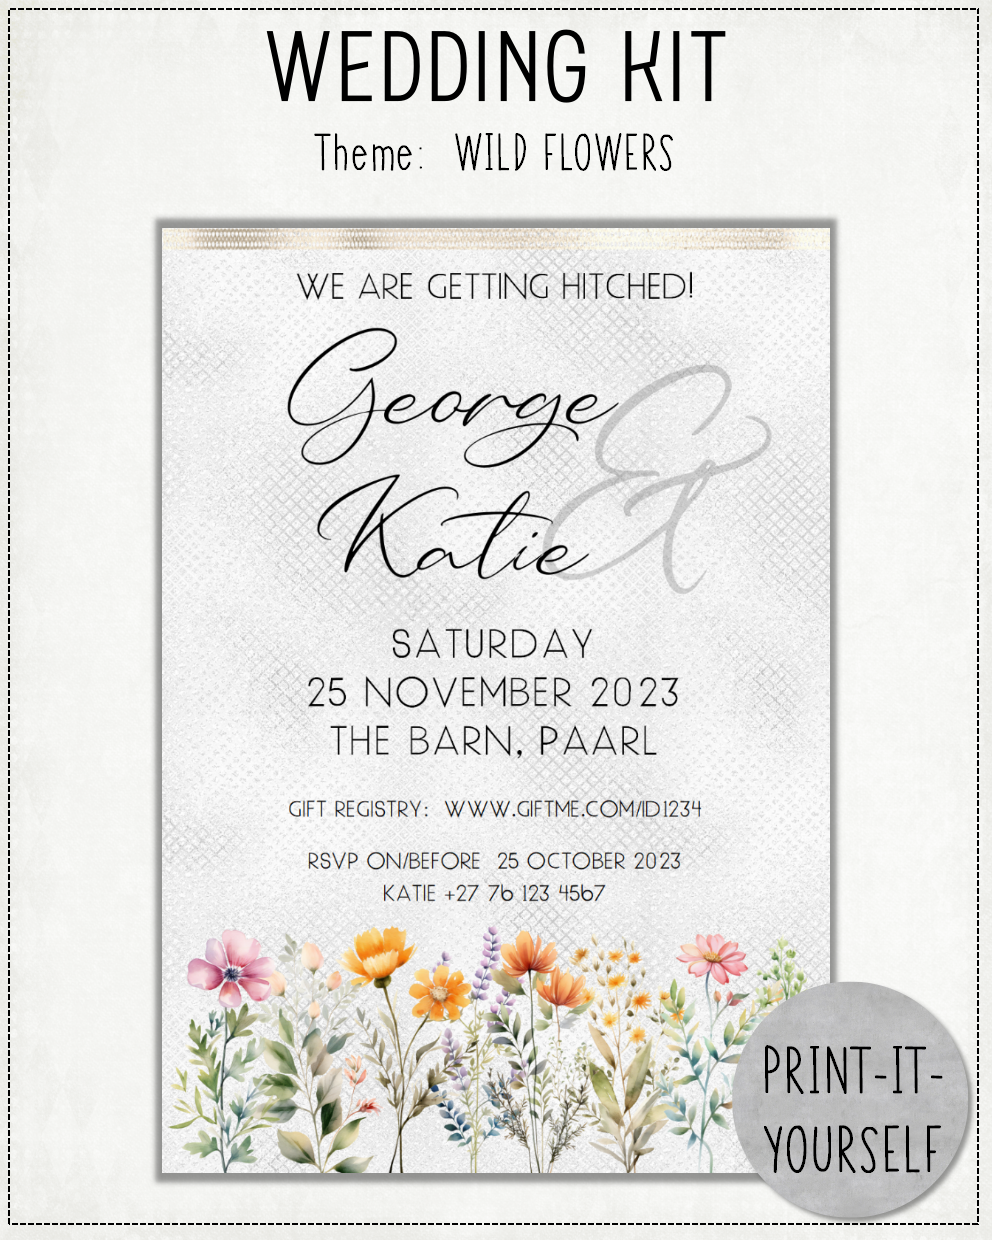 PRINT-IT-YOURSELF:  Wedding Kit - Wild Flowers